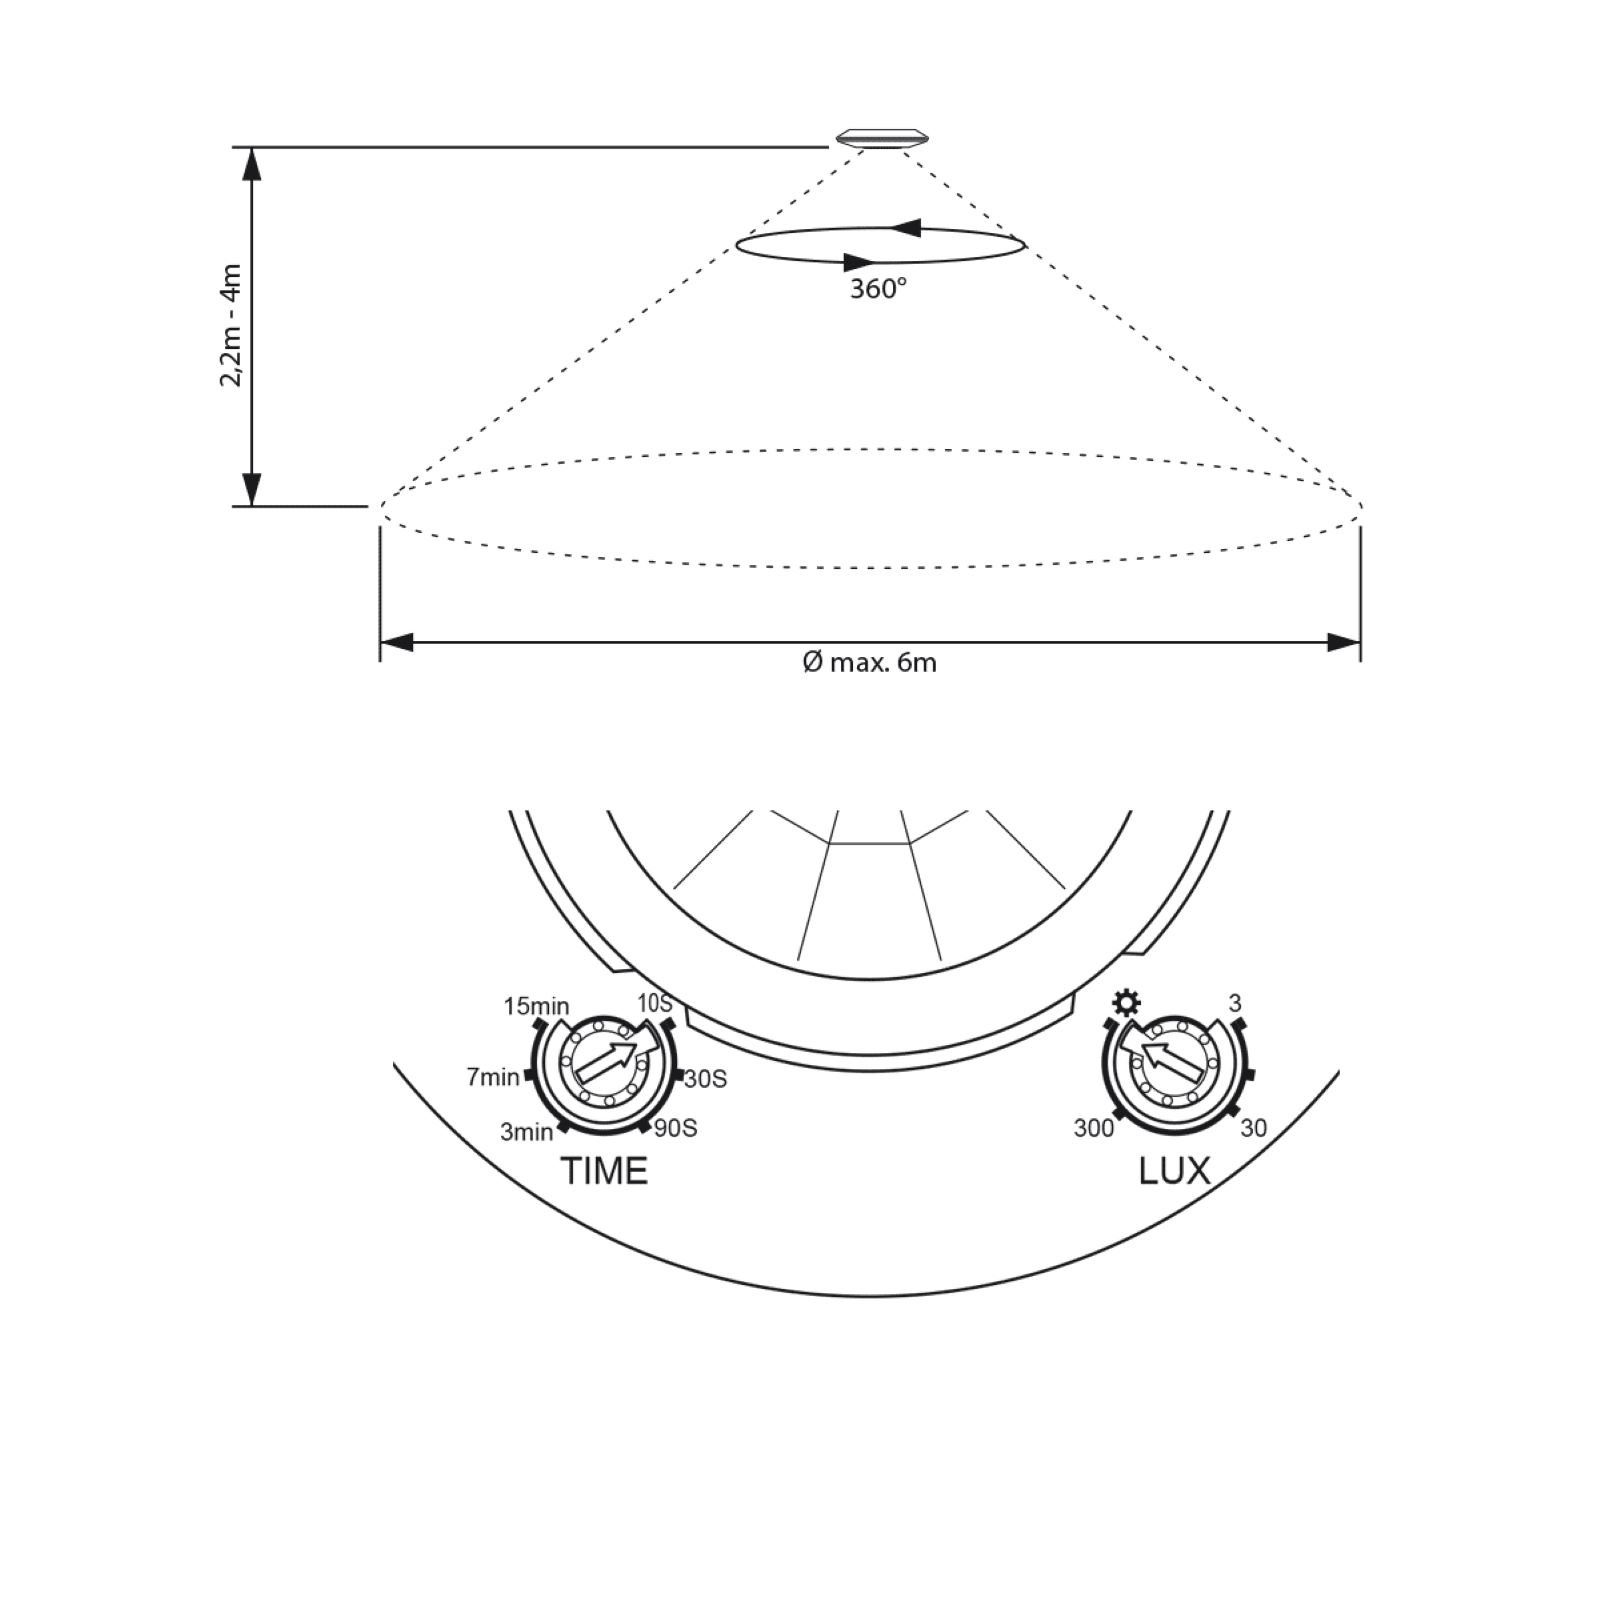 2er SEBSON einstellbar Bewegungsmelder - Bewegungsmelder LED Aufputz Infrarot Set geeignet